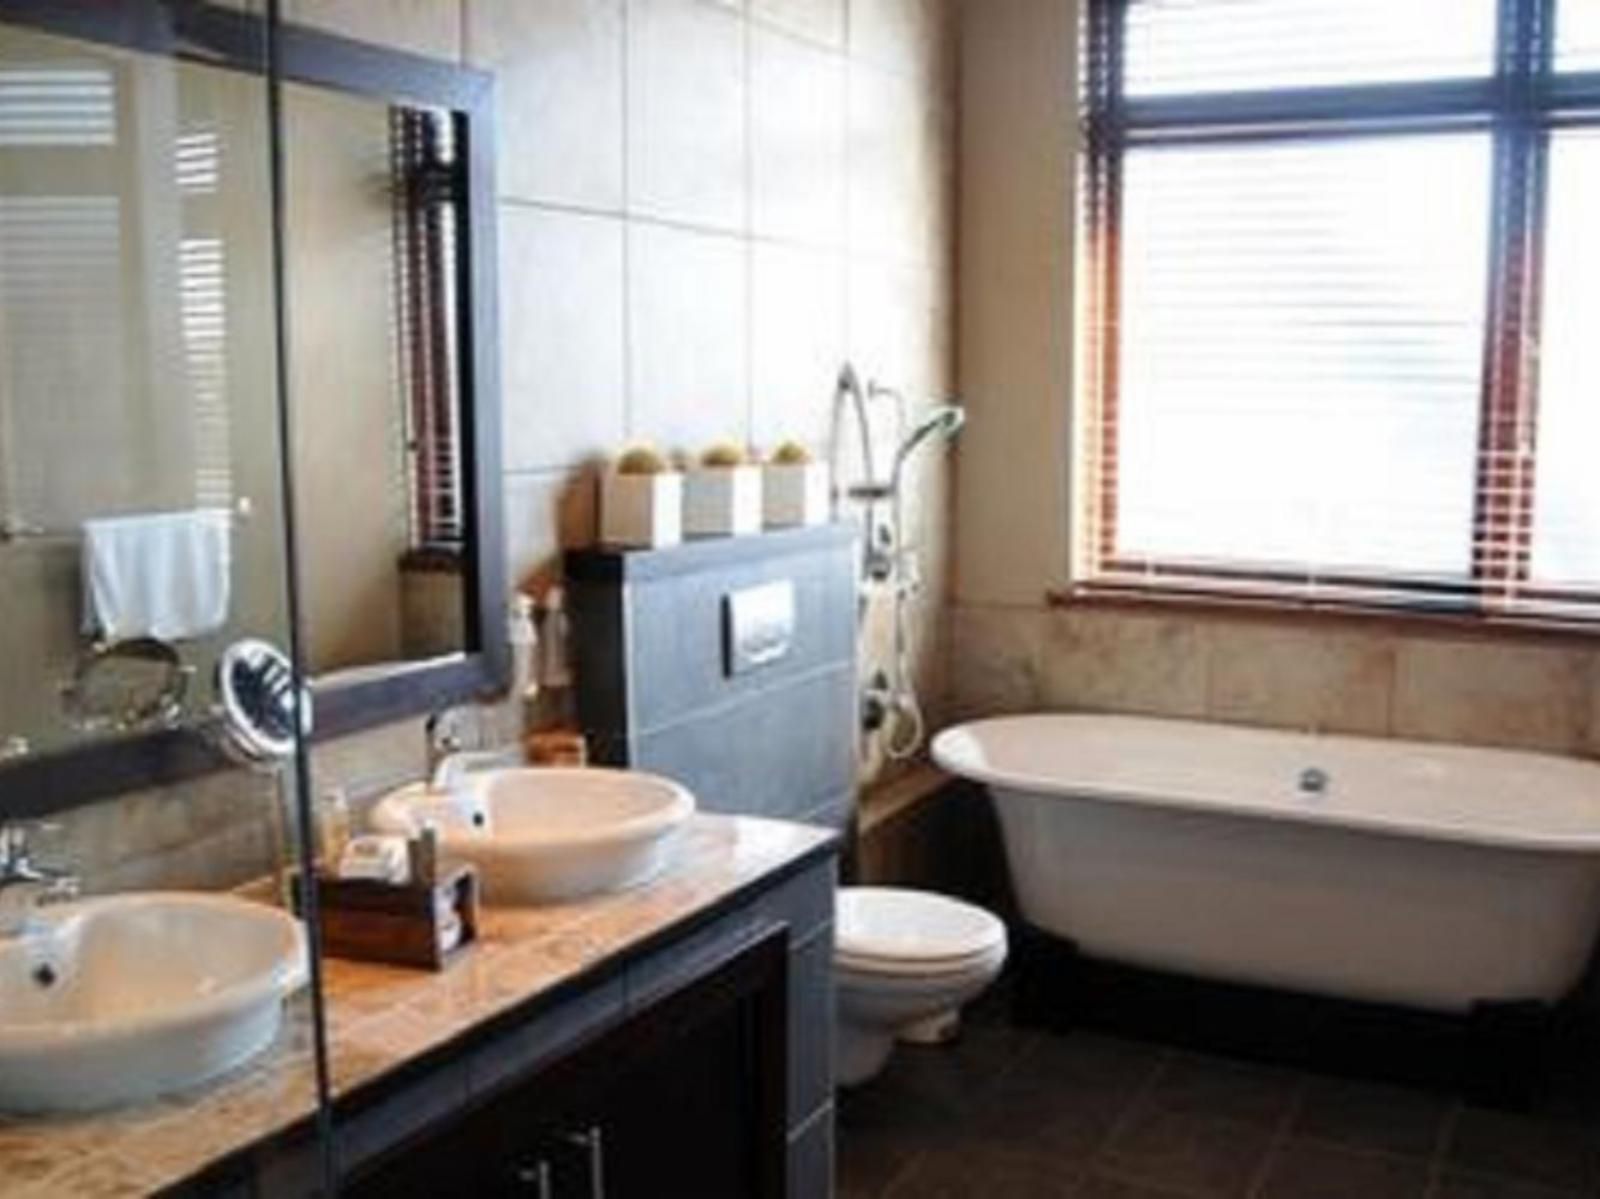 Manor 38 Summerstrand Port Elizabeth Eastern Cape South Africa Bathroom